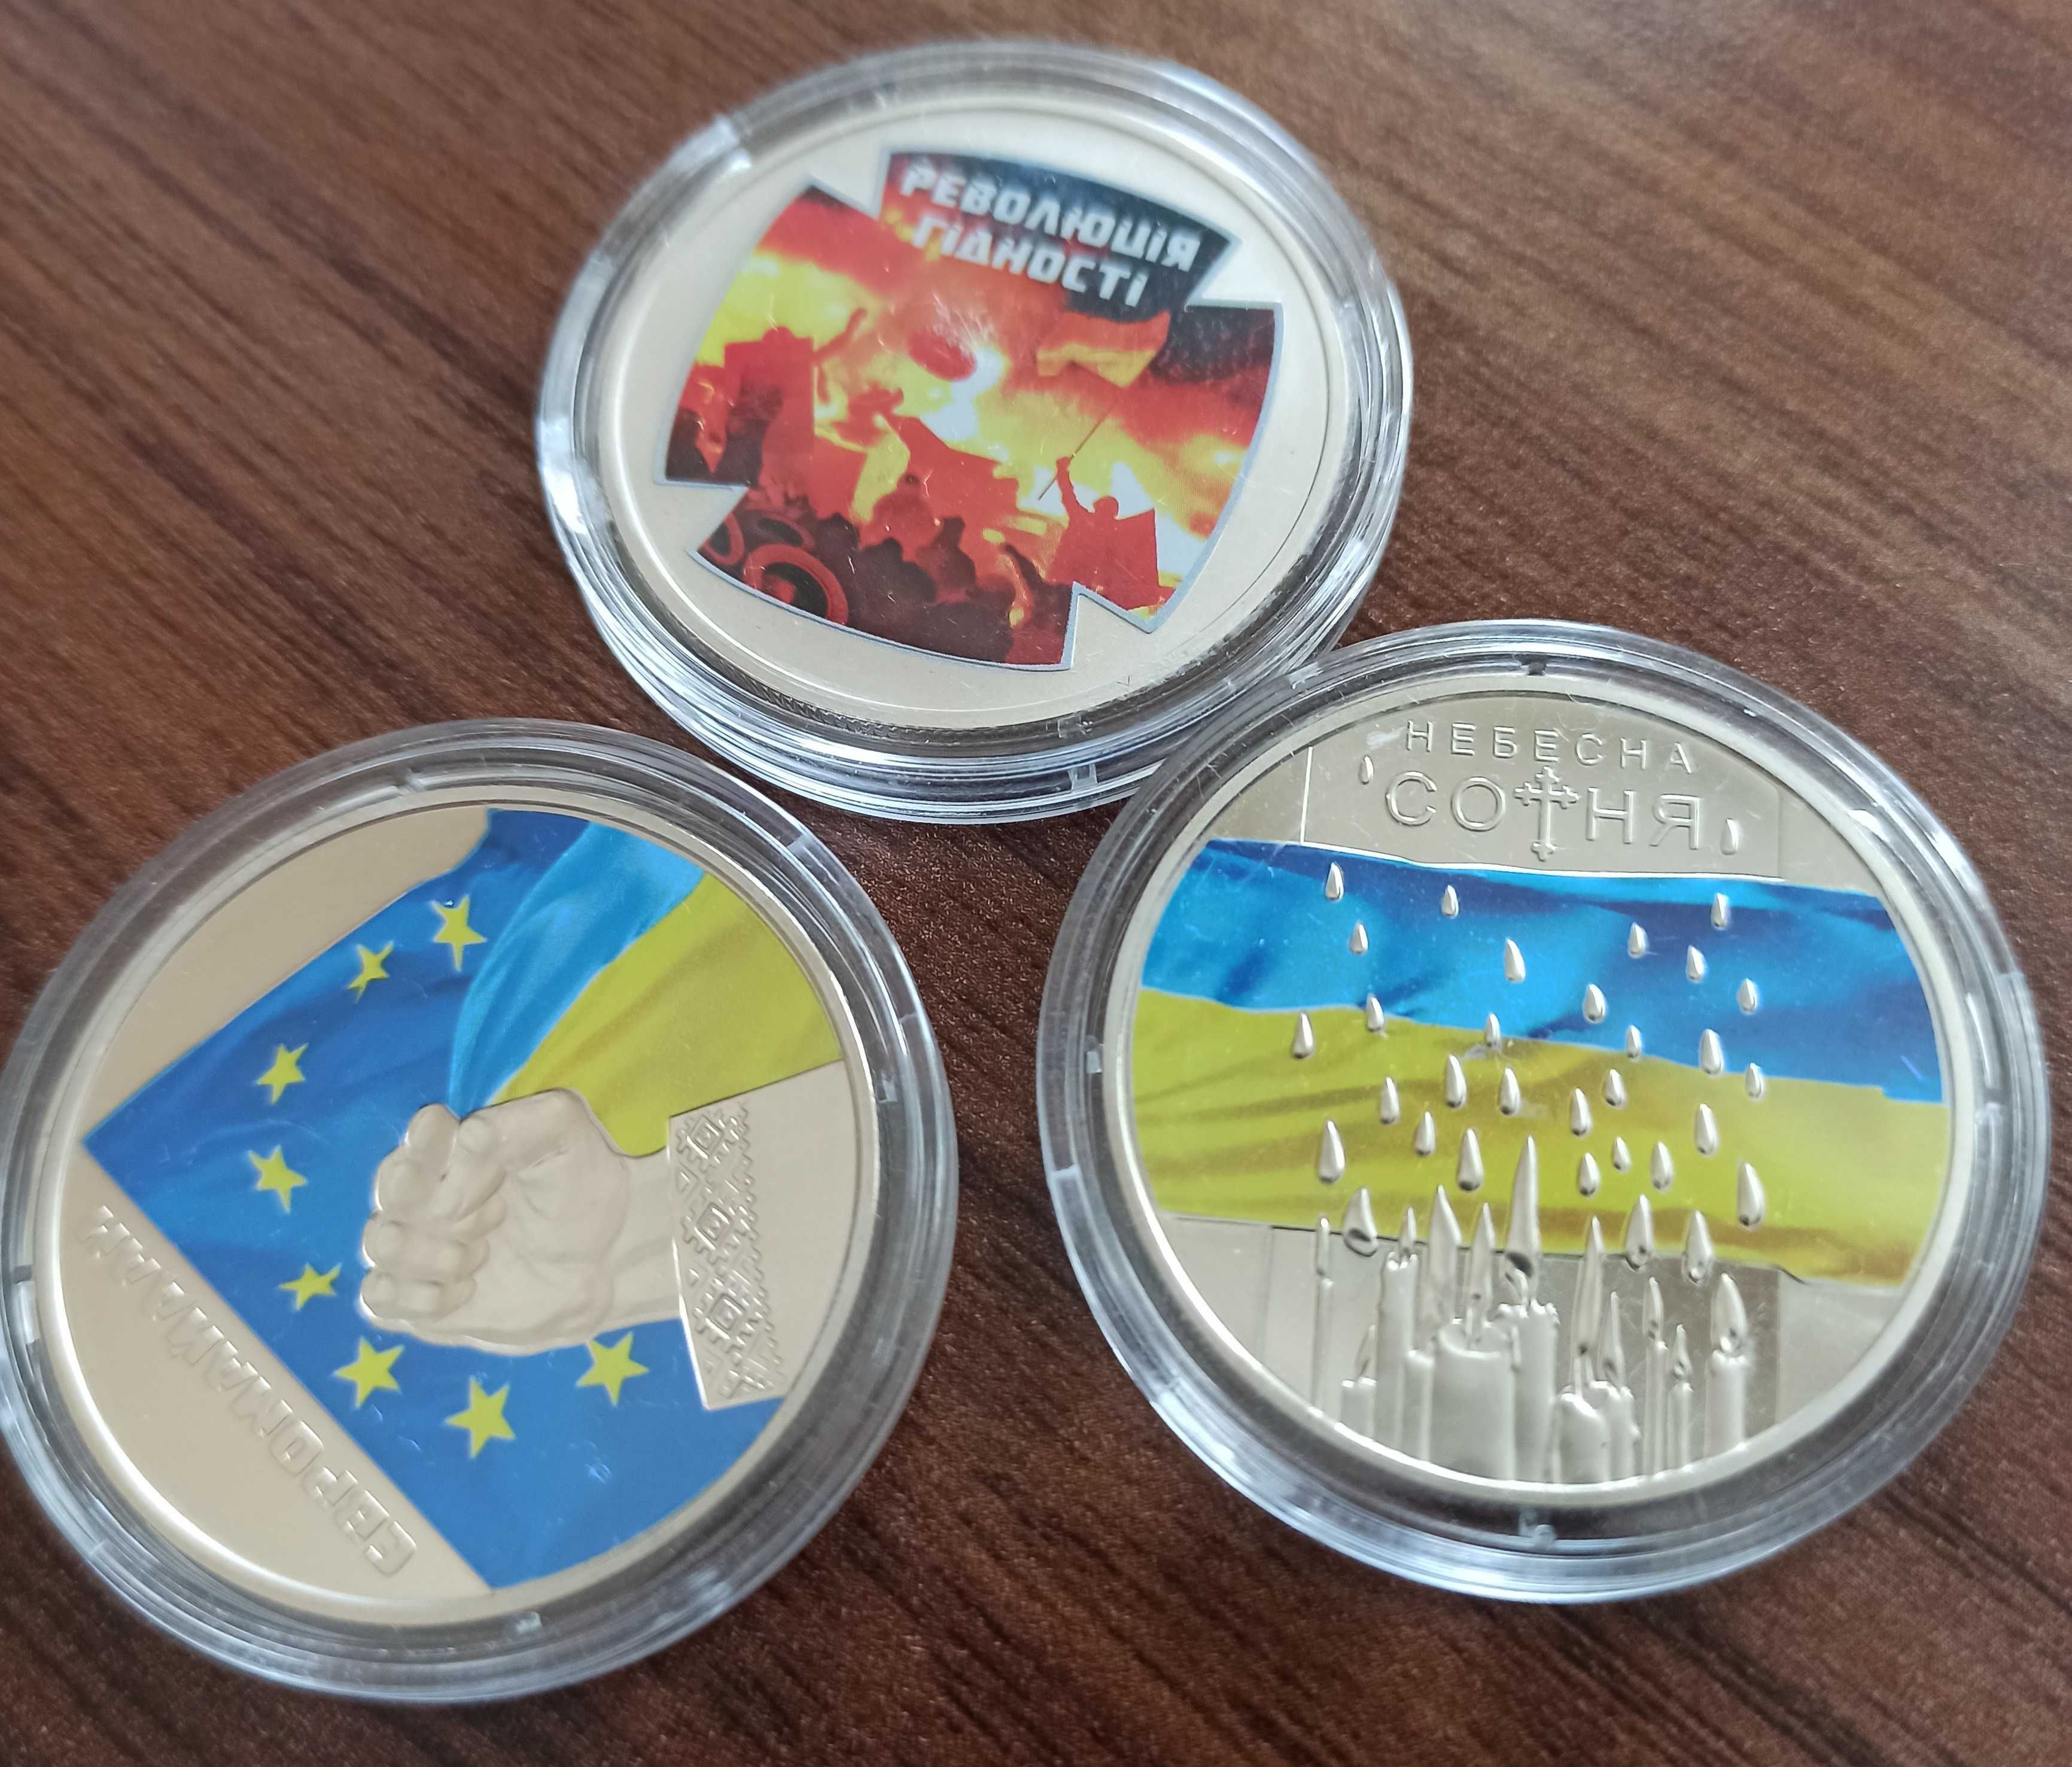 Монети НБУ кольорові тамподрук асортимент